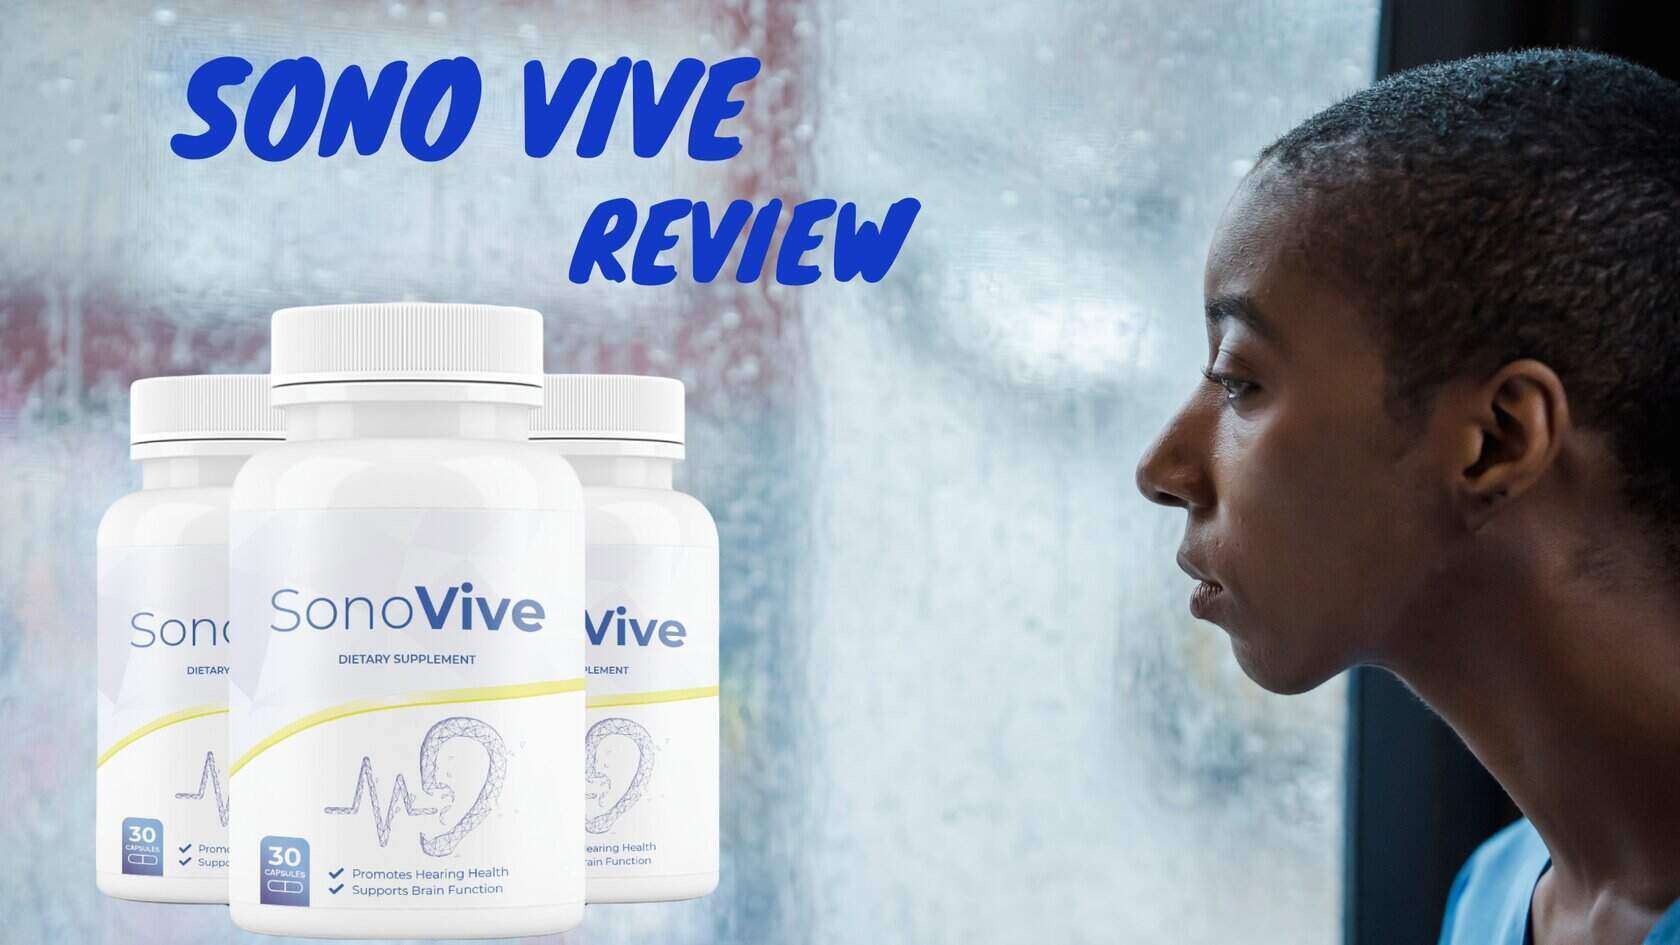 I'm Vive Review